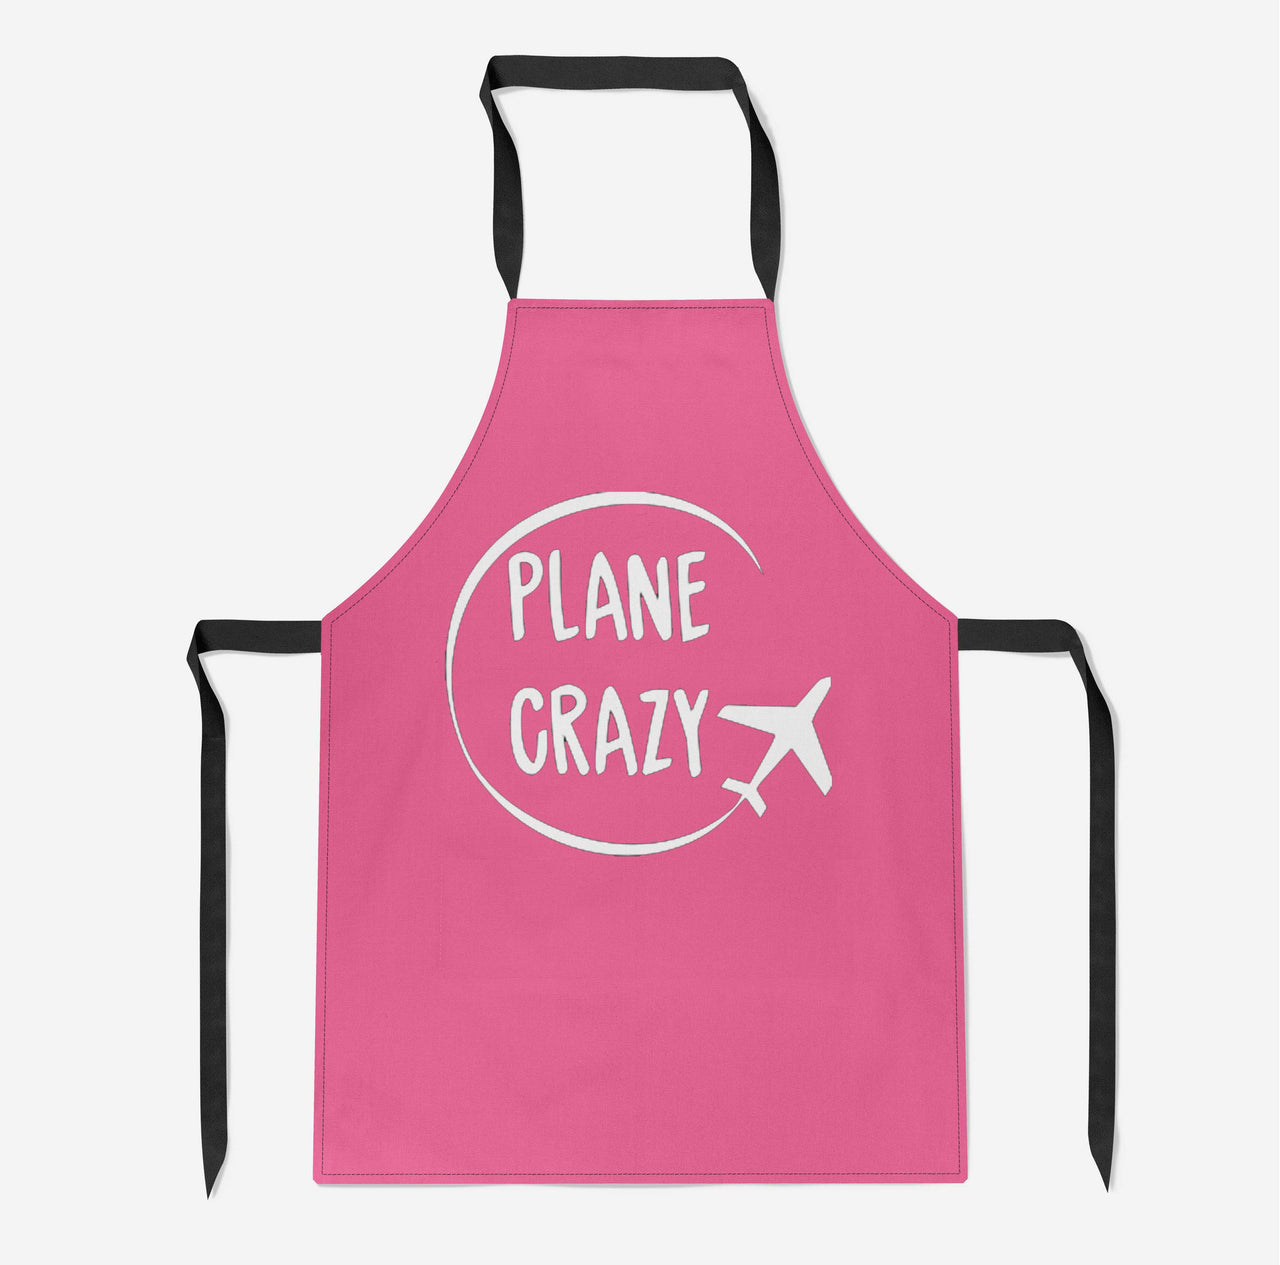 Plane Crazy Designed Kitchen Aprons